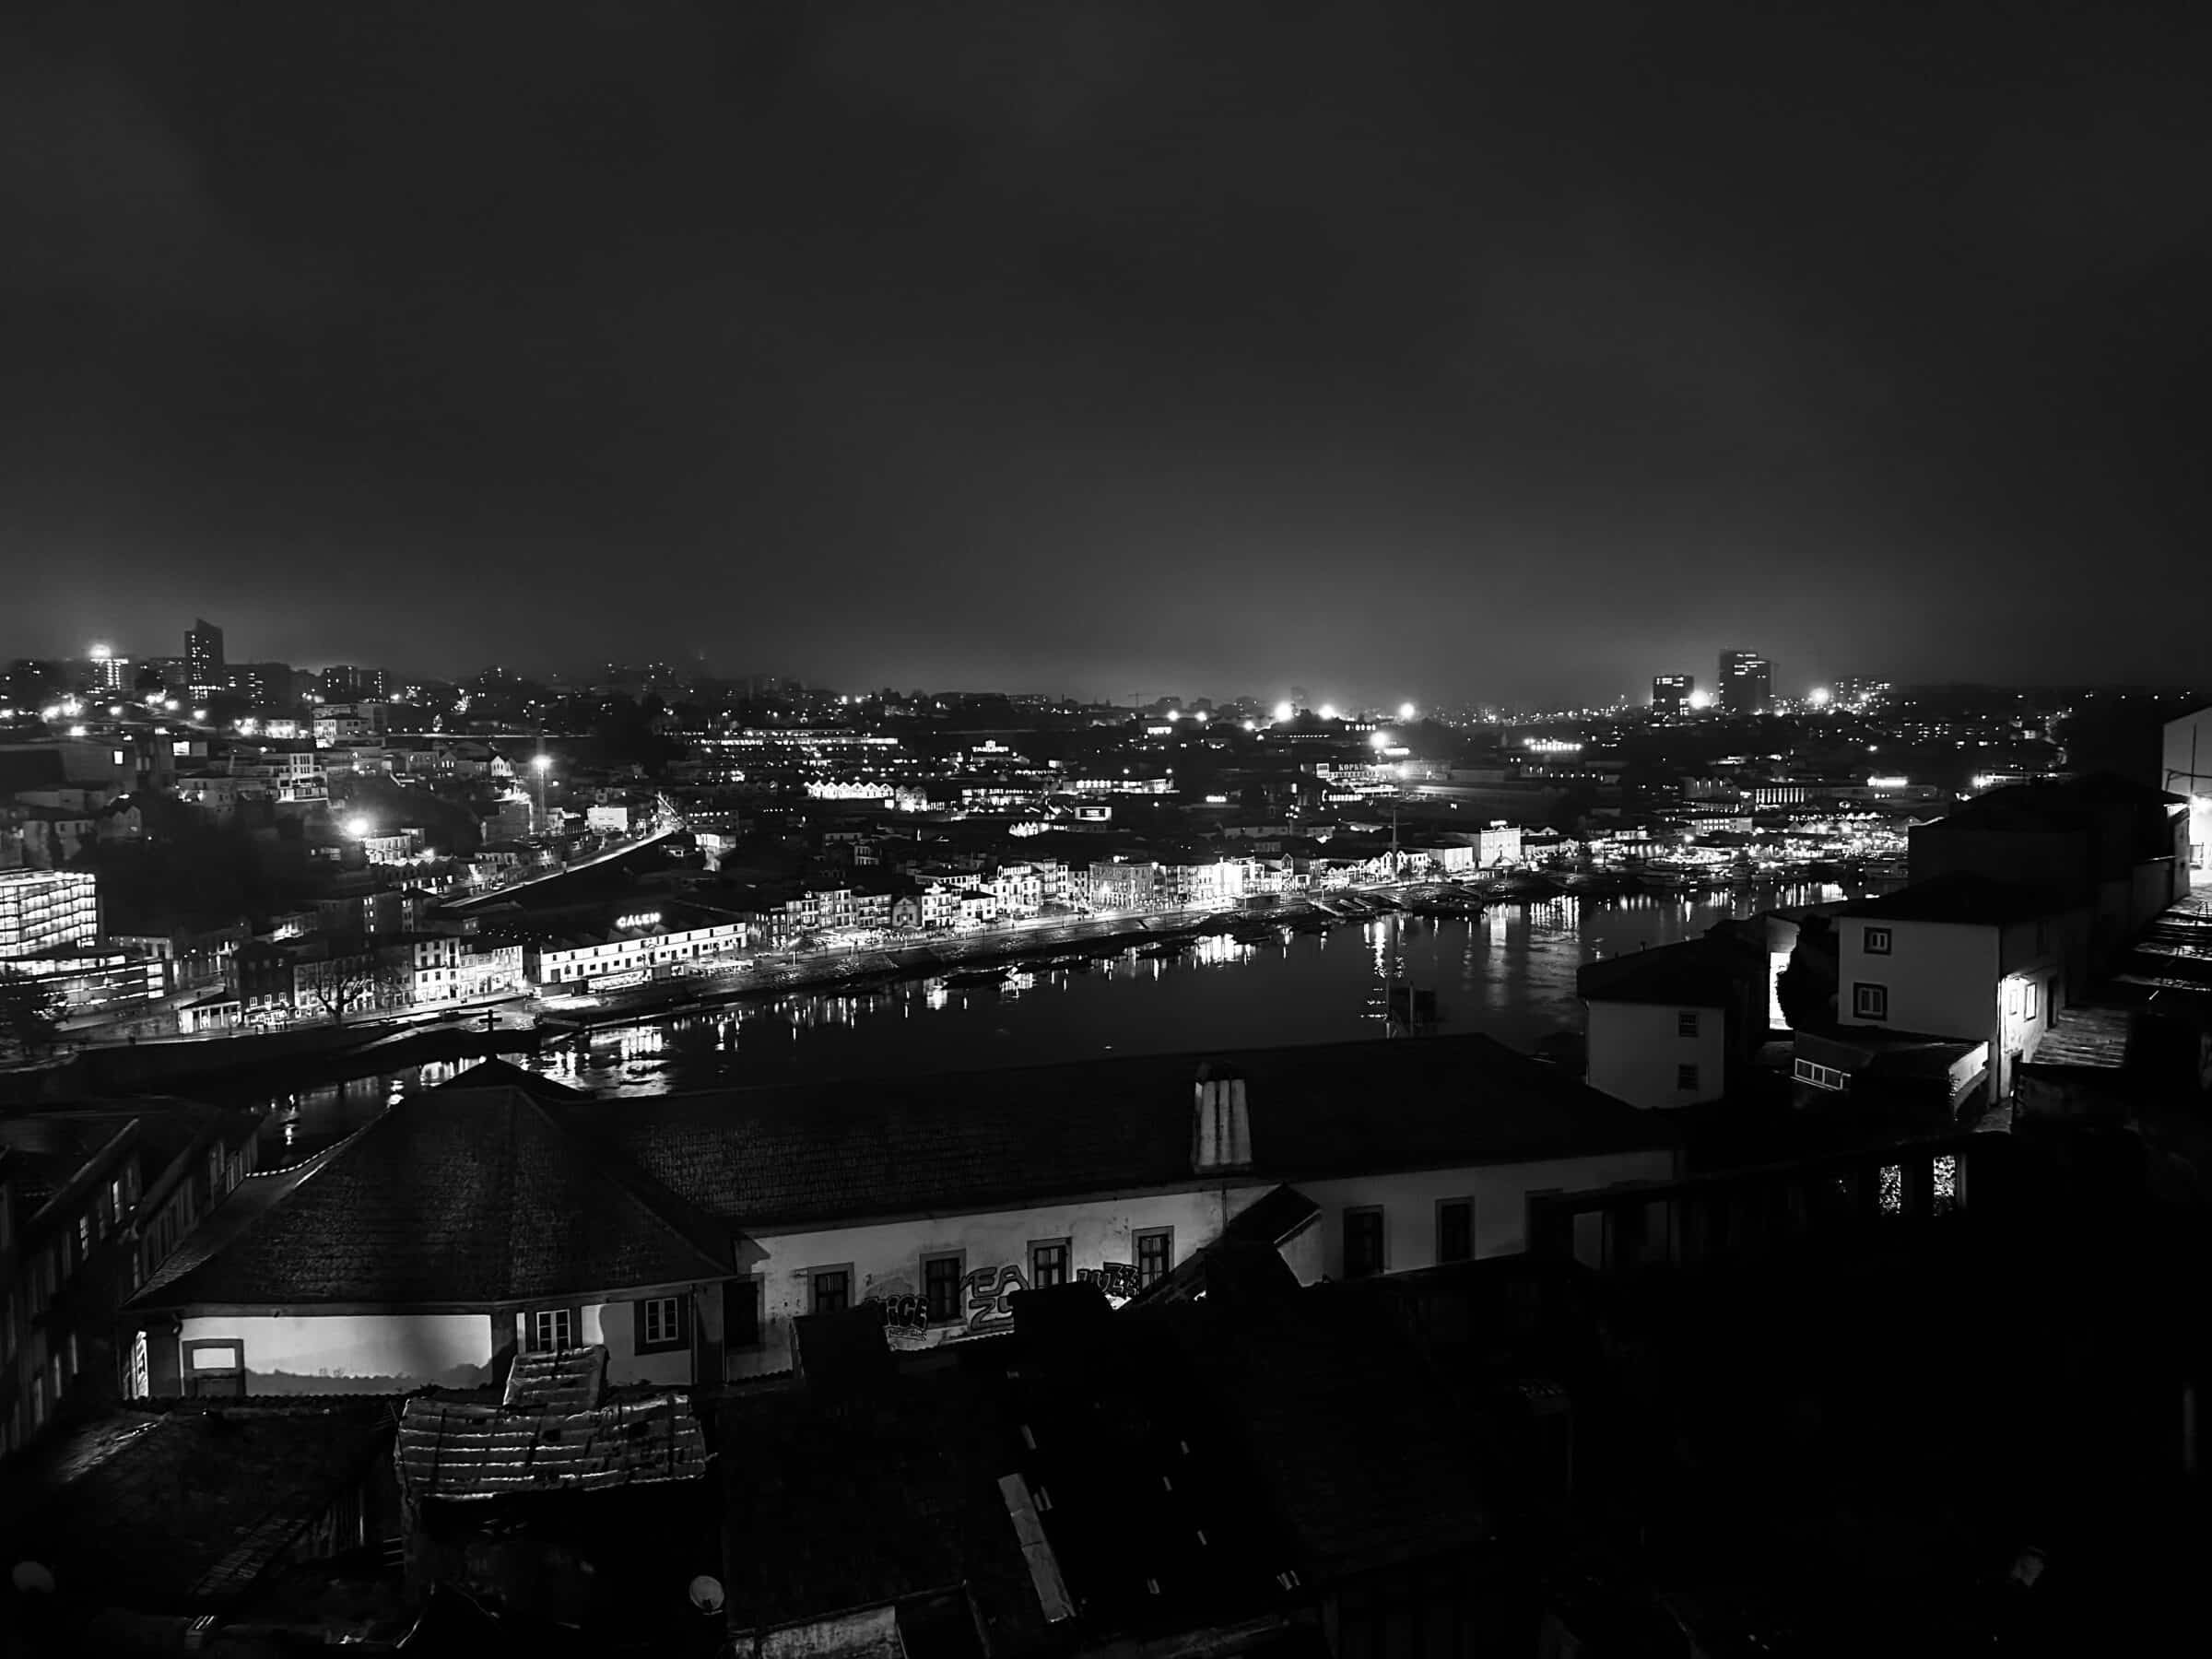 My fleeting glimpse of Porto by night